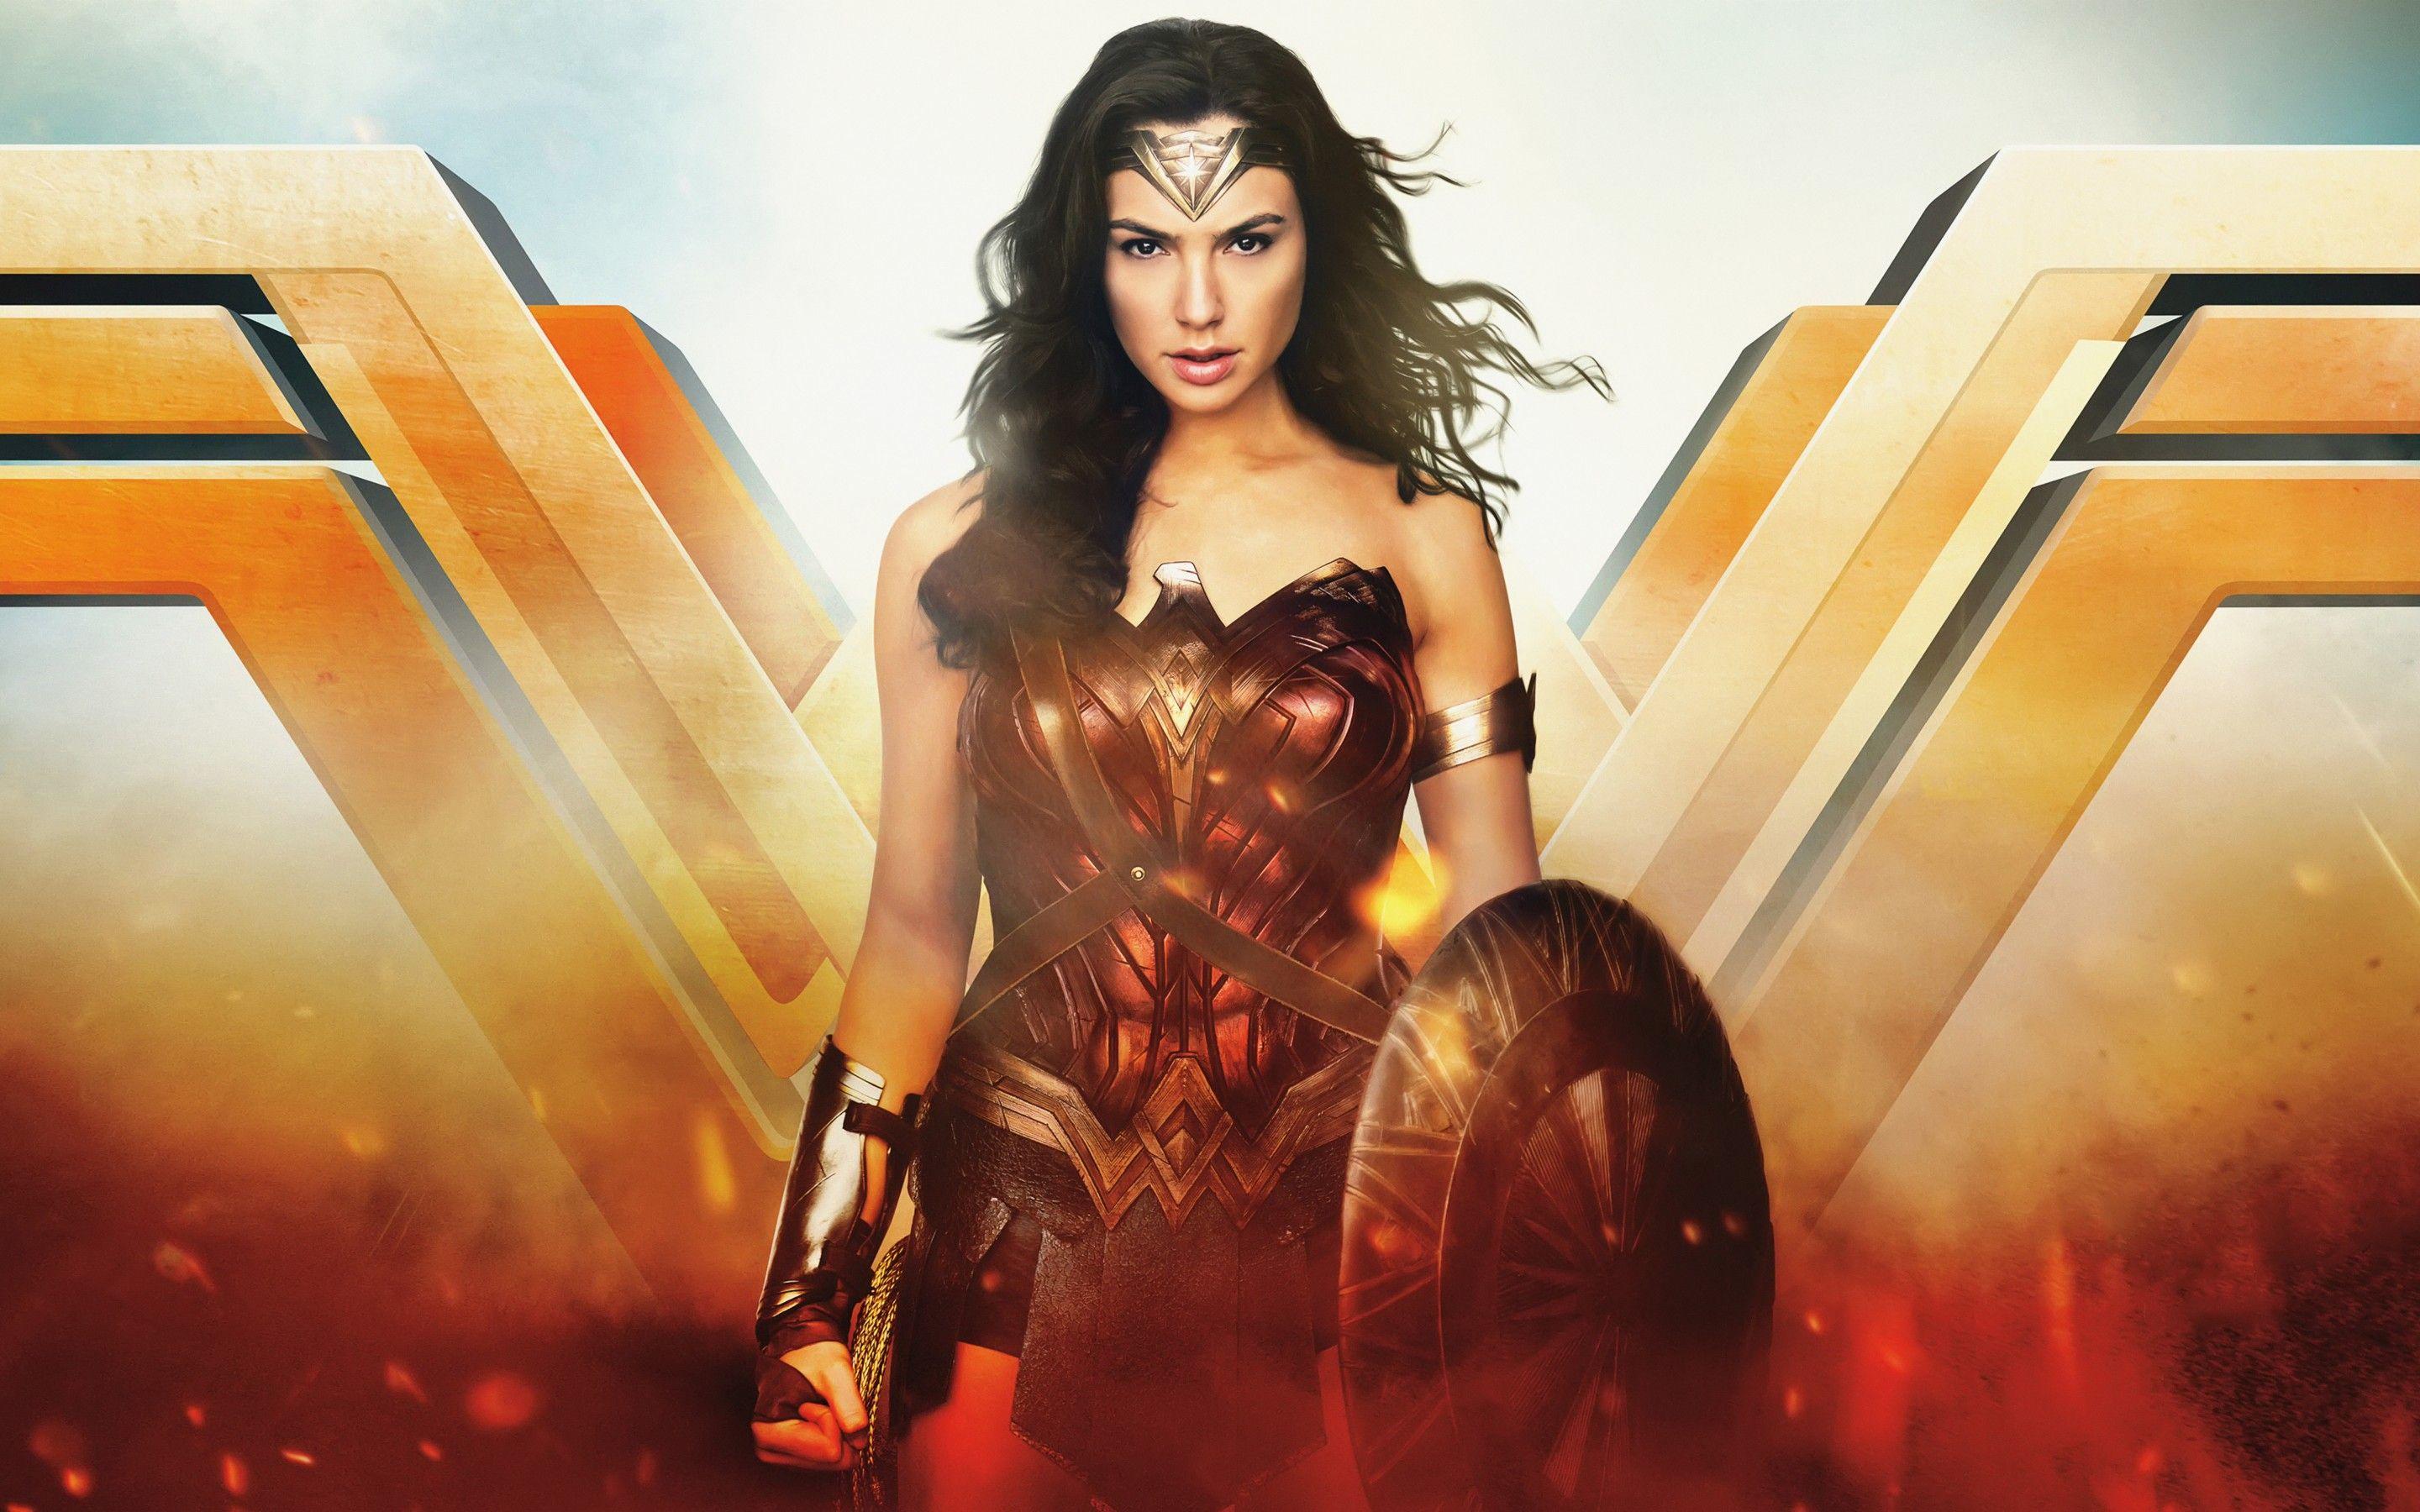 Wallpaper Wonder Woman, Gal Gadot, HD, 4K, 8K, Movies